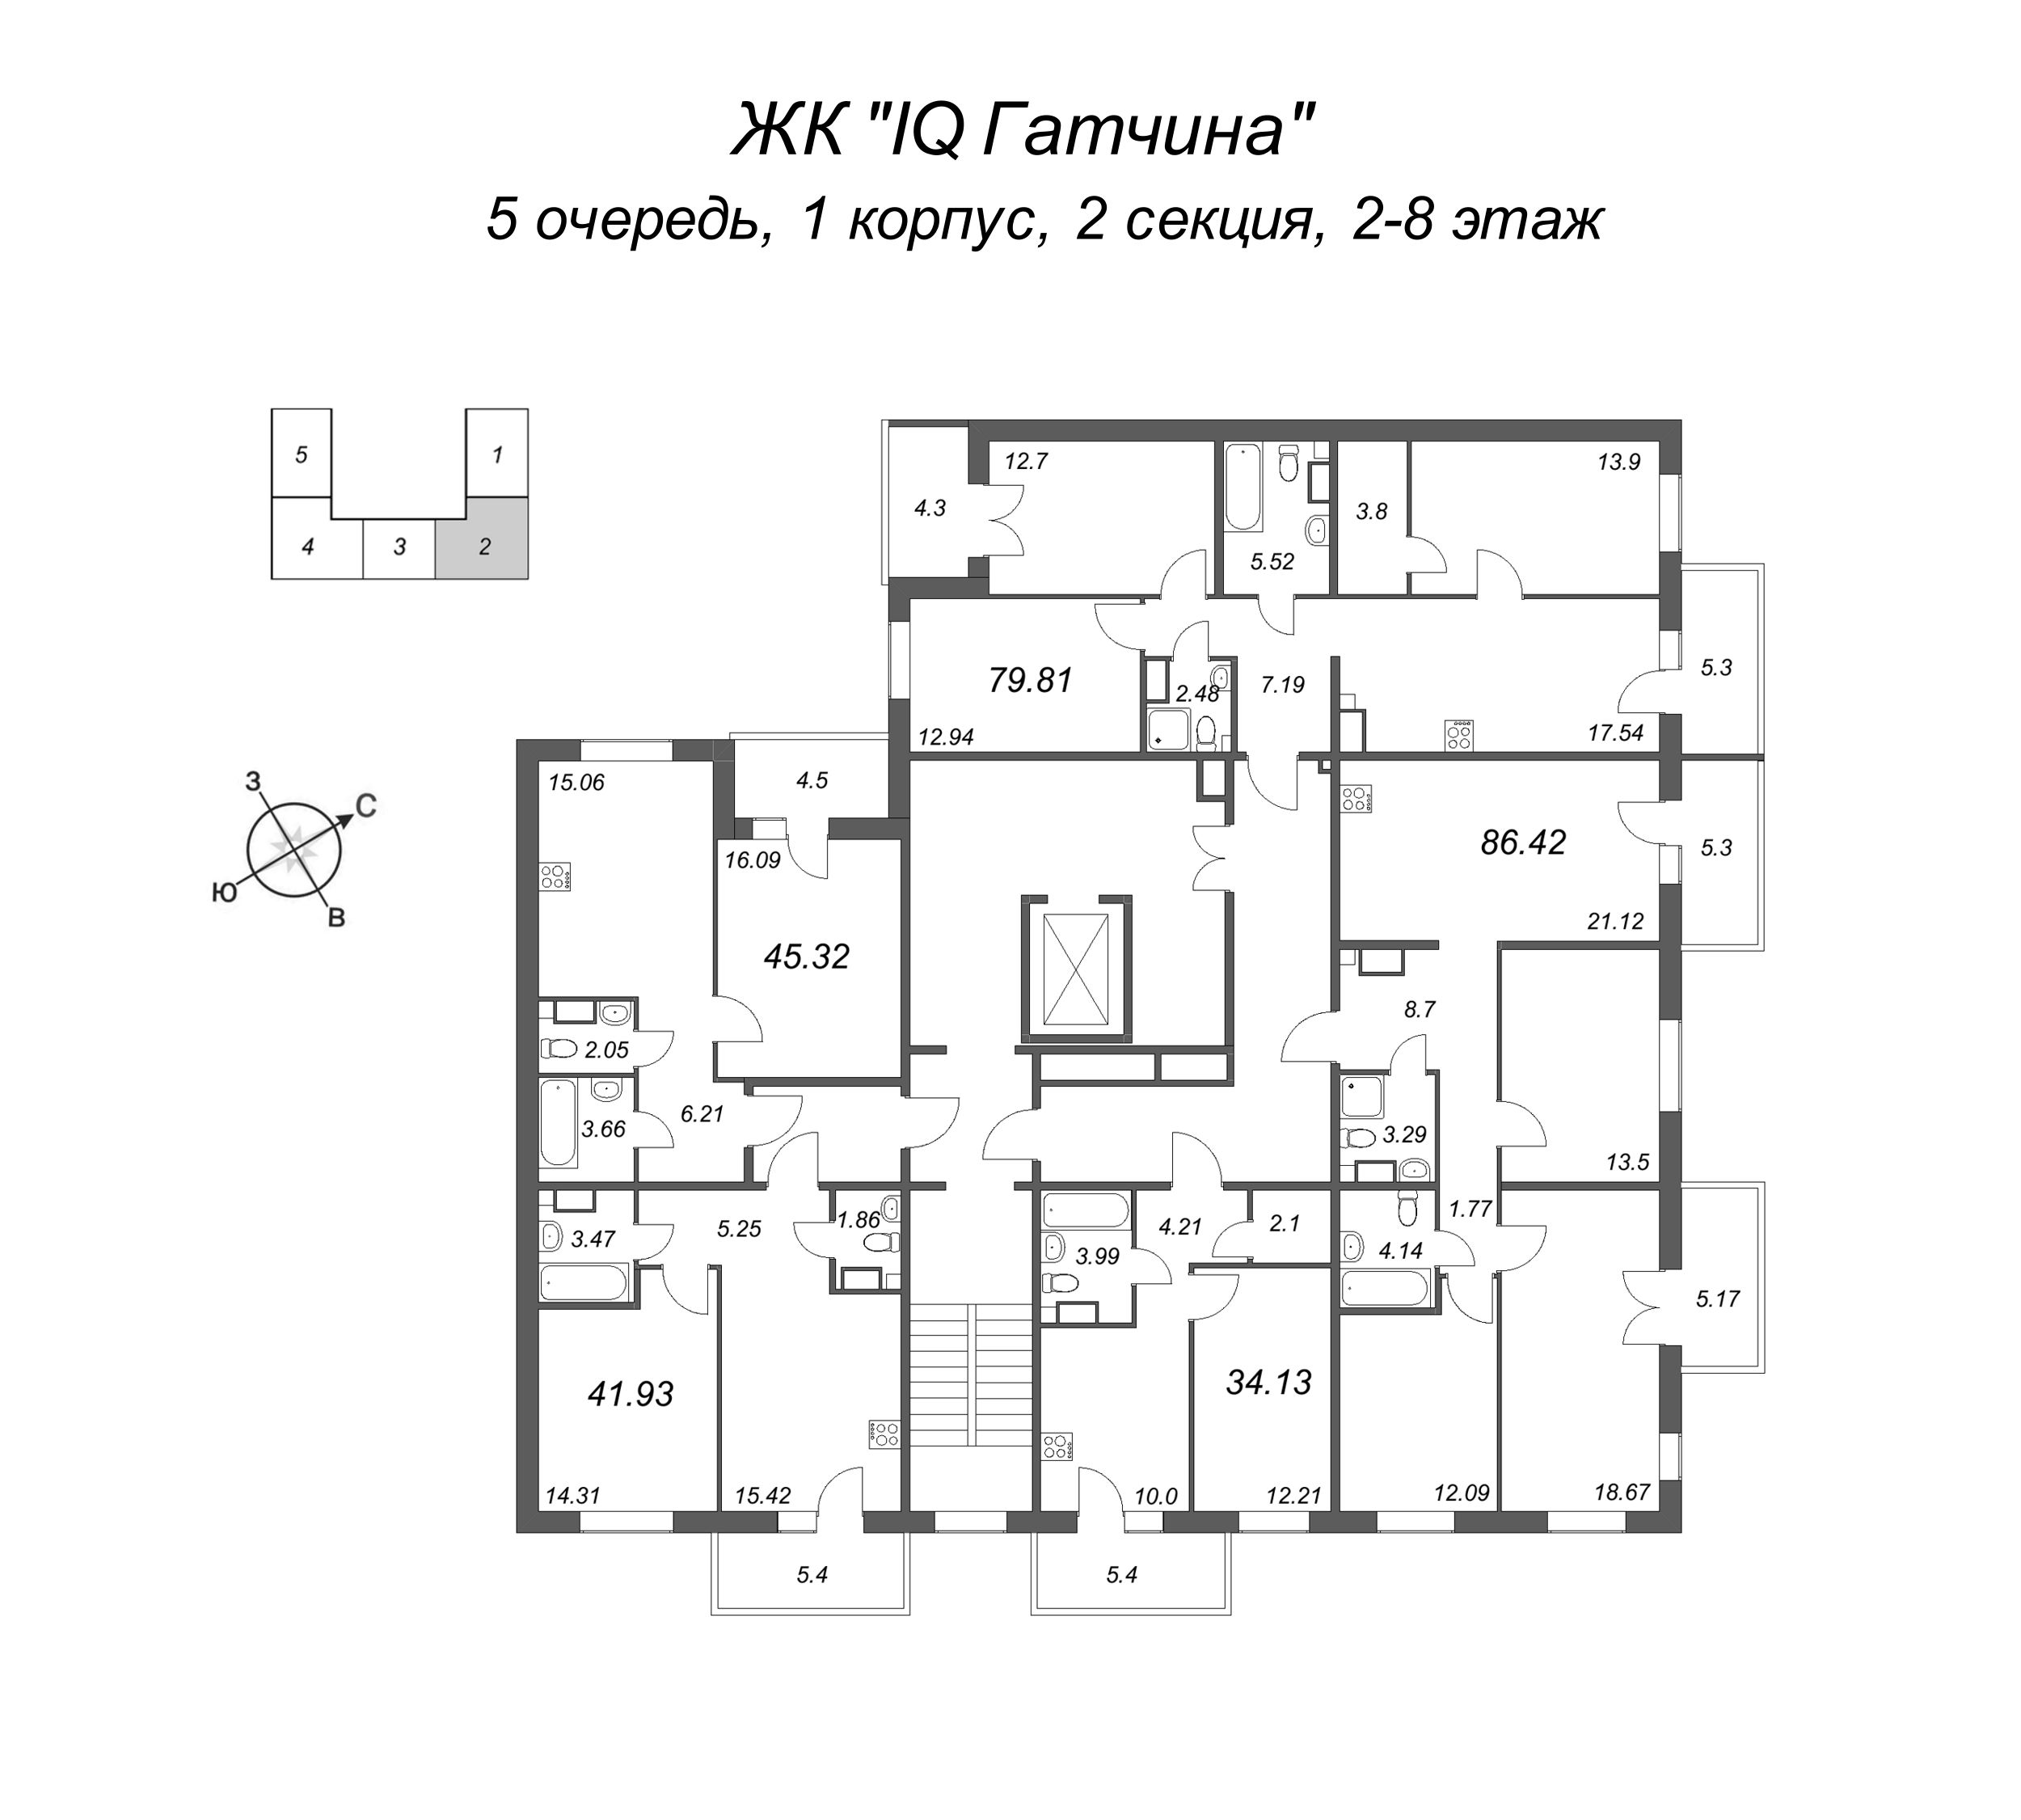 4-комнатная (Евро) квартира, 80.31 м² - планировка этажа